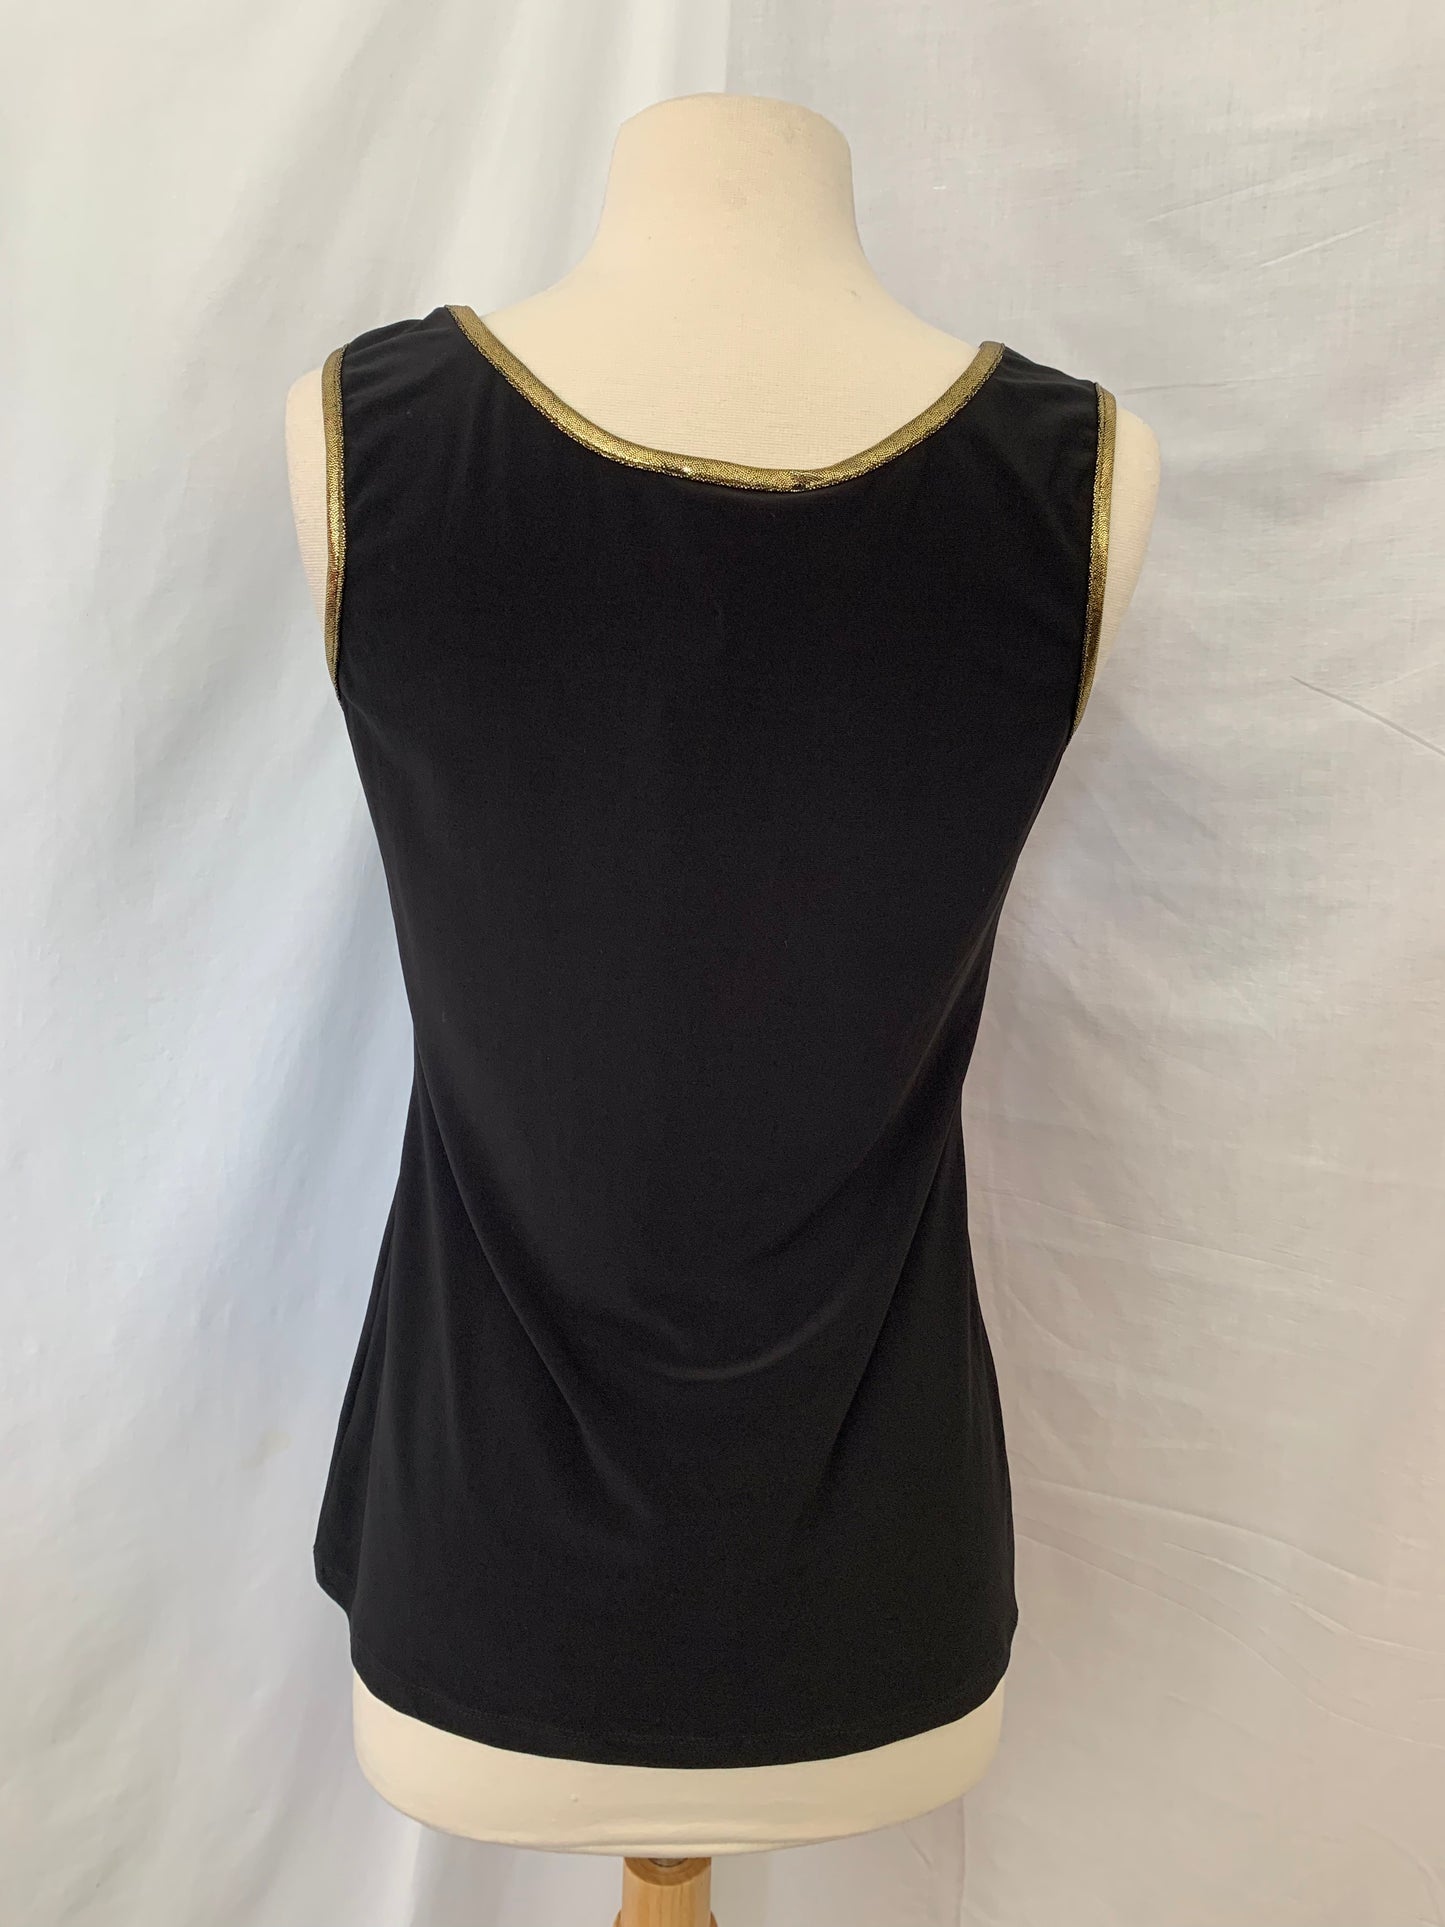 NWT - FRANK LYMAN DESIGN black with gold trim Sleeveless Shirt - 8